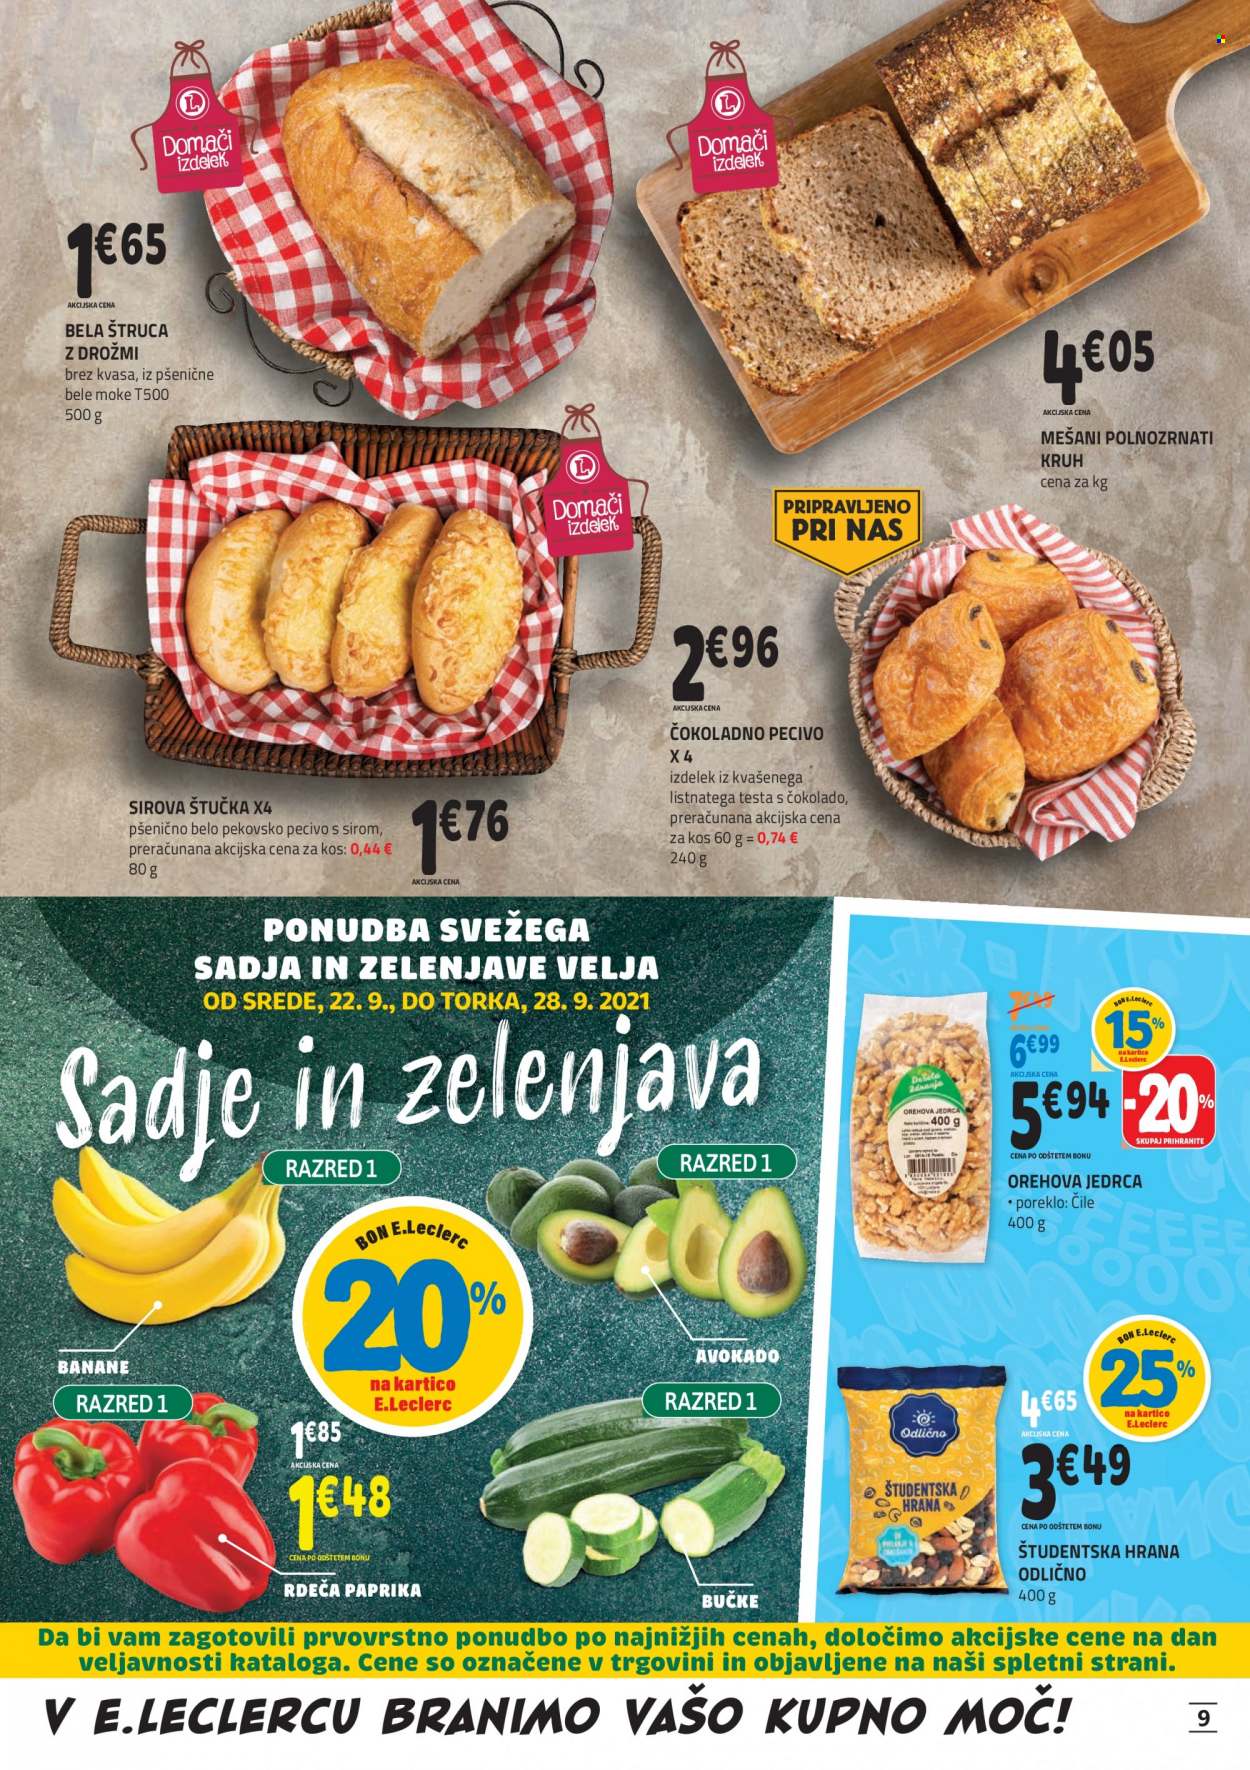 thumbnail - E.Leclerc katalog - 22.9.2021 - 2.10.2021 - Ponudba izdelkov - kruh, pecivo, štručka, avokado, bučke, paprika, rdeča paprika, orehova jedrca. Stran 9.